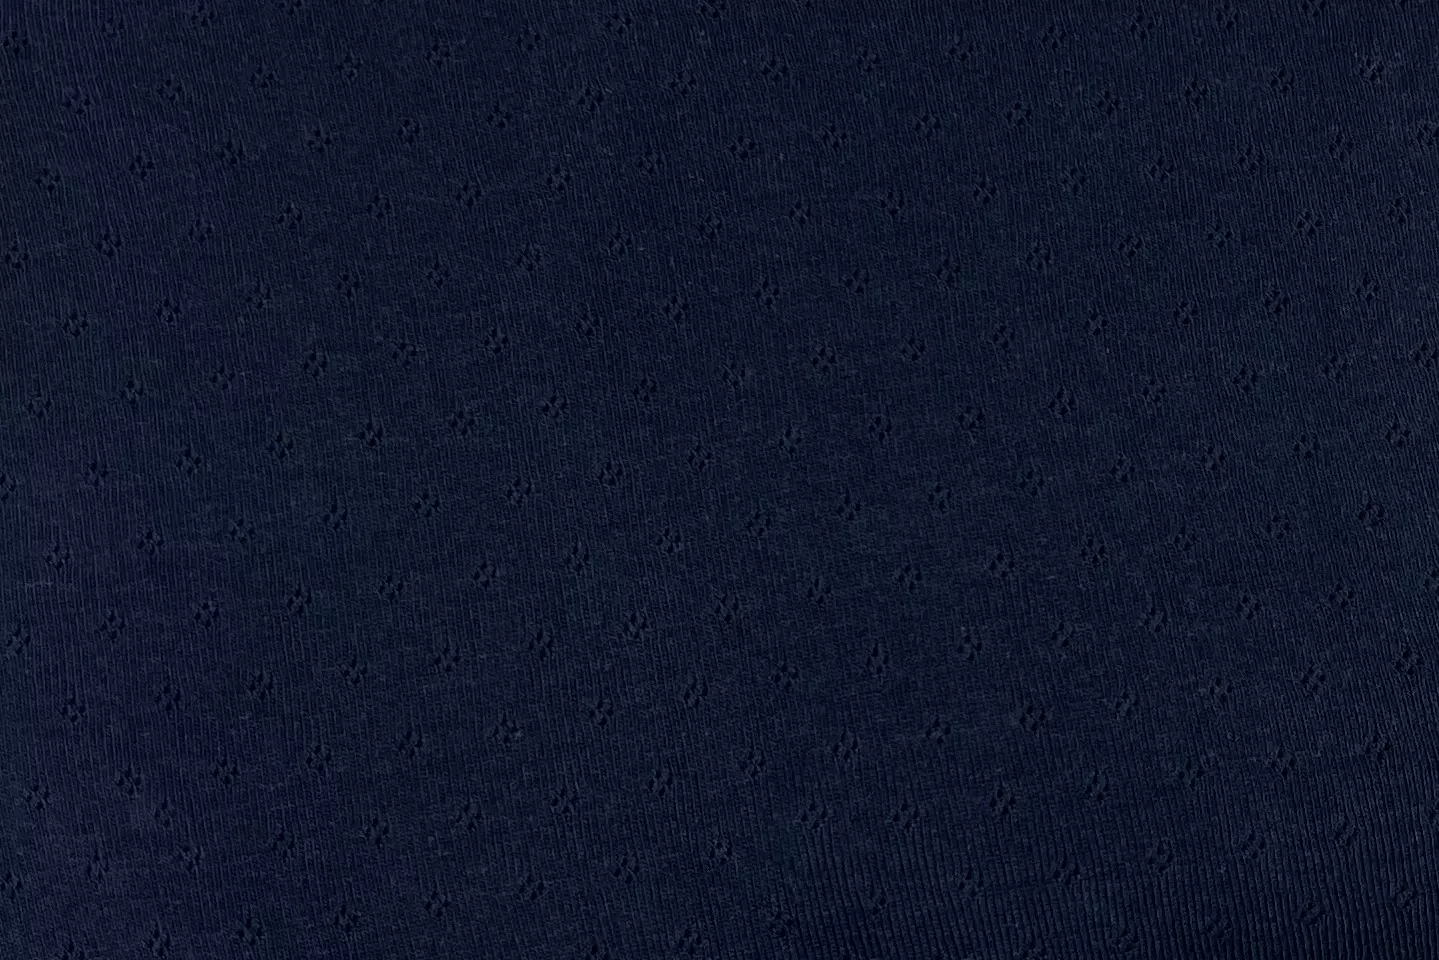 Feinstrickjersey mit Rauten Lochmuster in dunkelblau